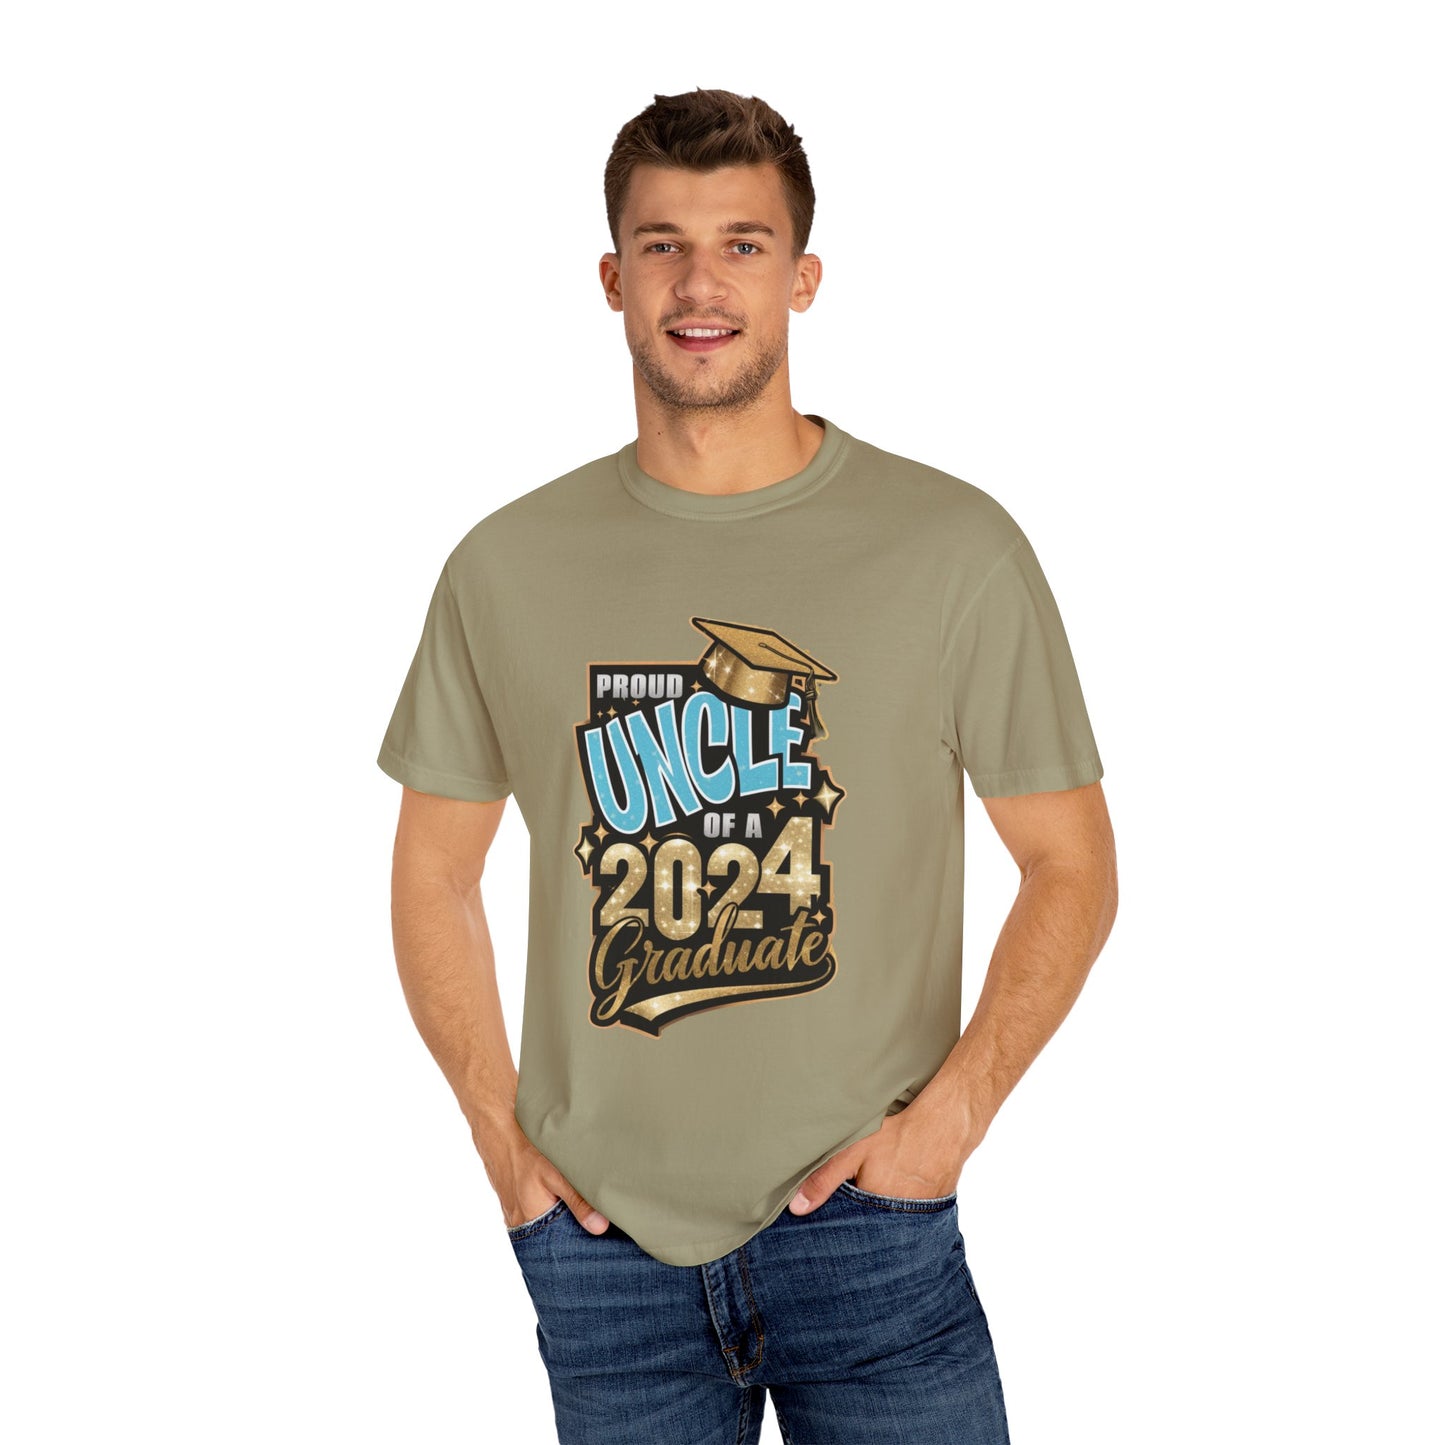 Proud Uncle of a 2024 Graduate Unisex Garment-dyed T-shirt Cotton Funny Humorous Graphic Soft Premium Unisex Men Women Khaki T-shirt Birthday Gift-48